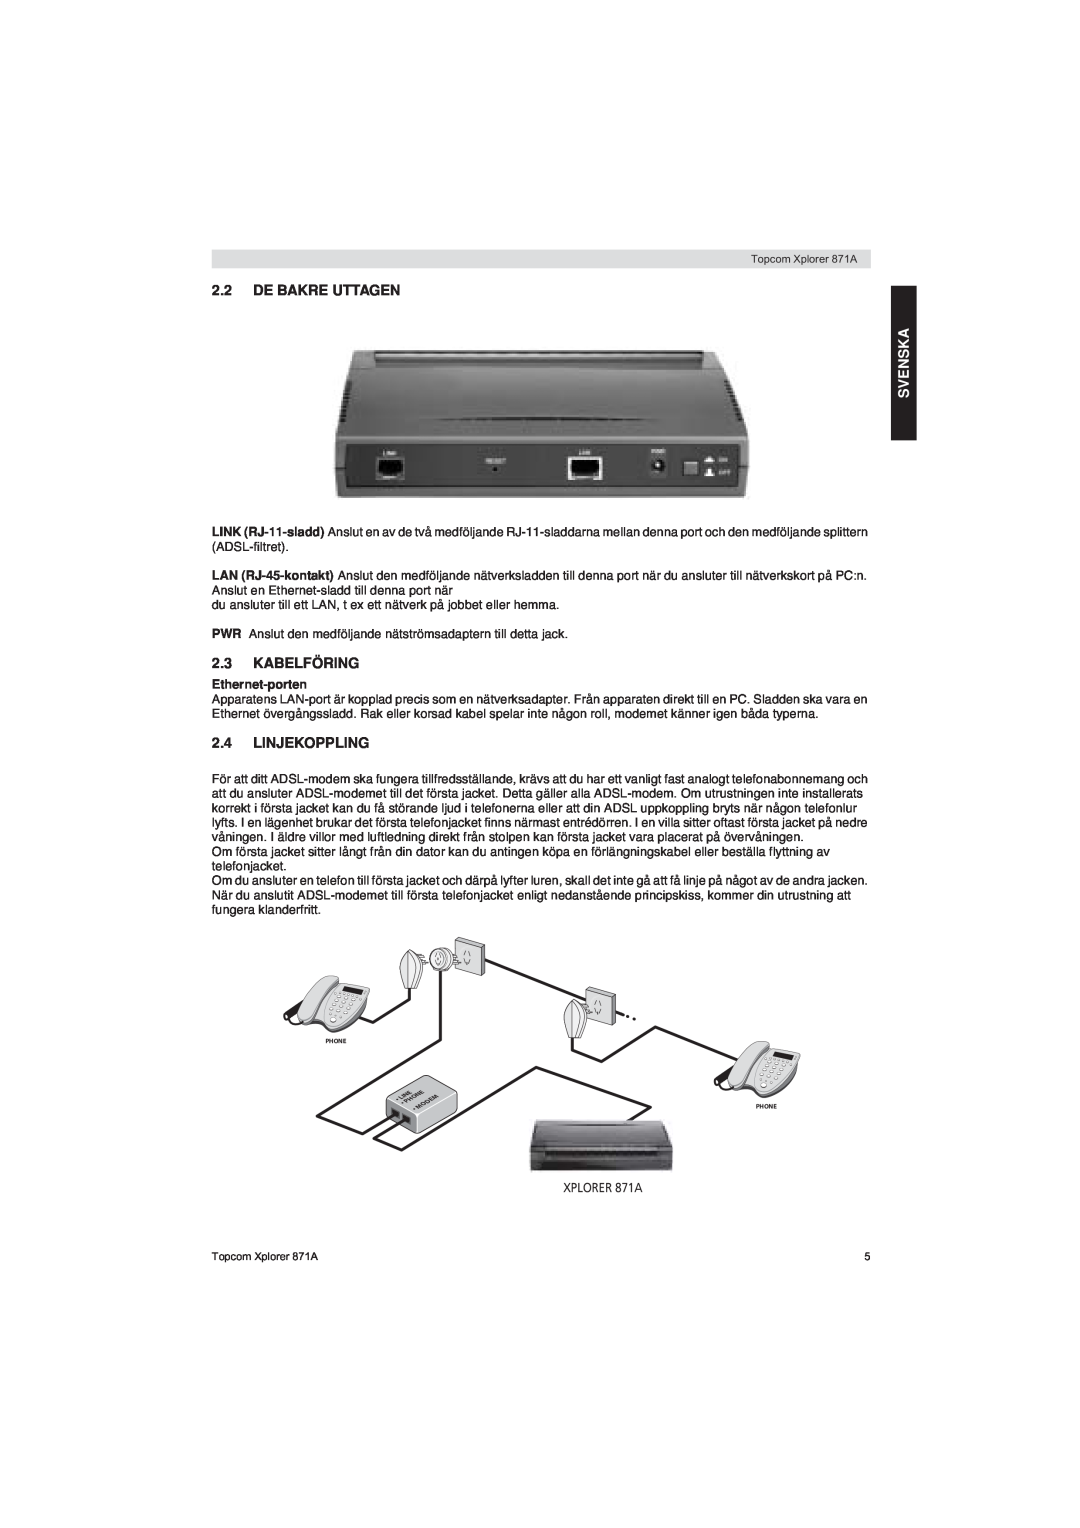 Topcom manual De Bakre Uttagen, Kabelföring, Linjekoppling, Ethernet-porten, Svenska, XPLORER 871A 